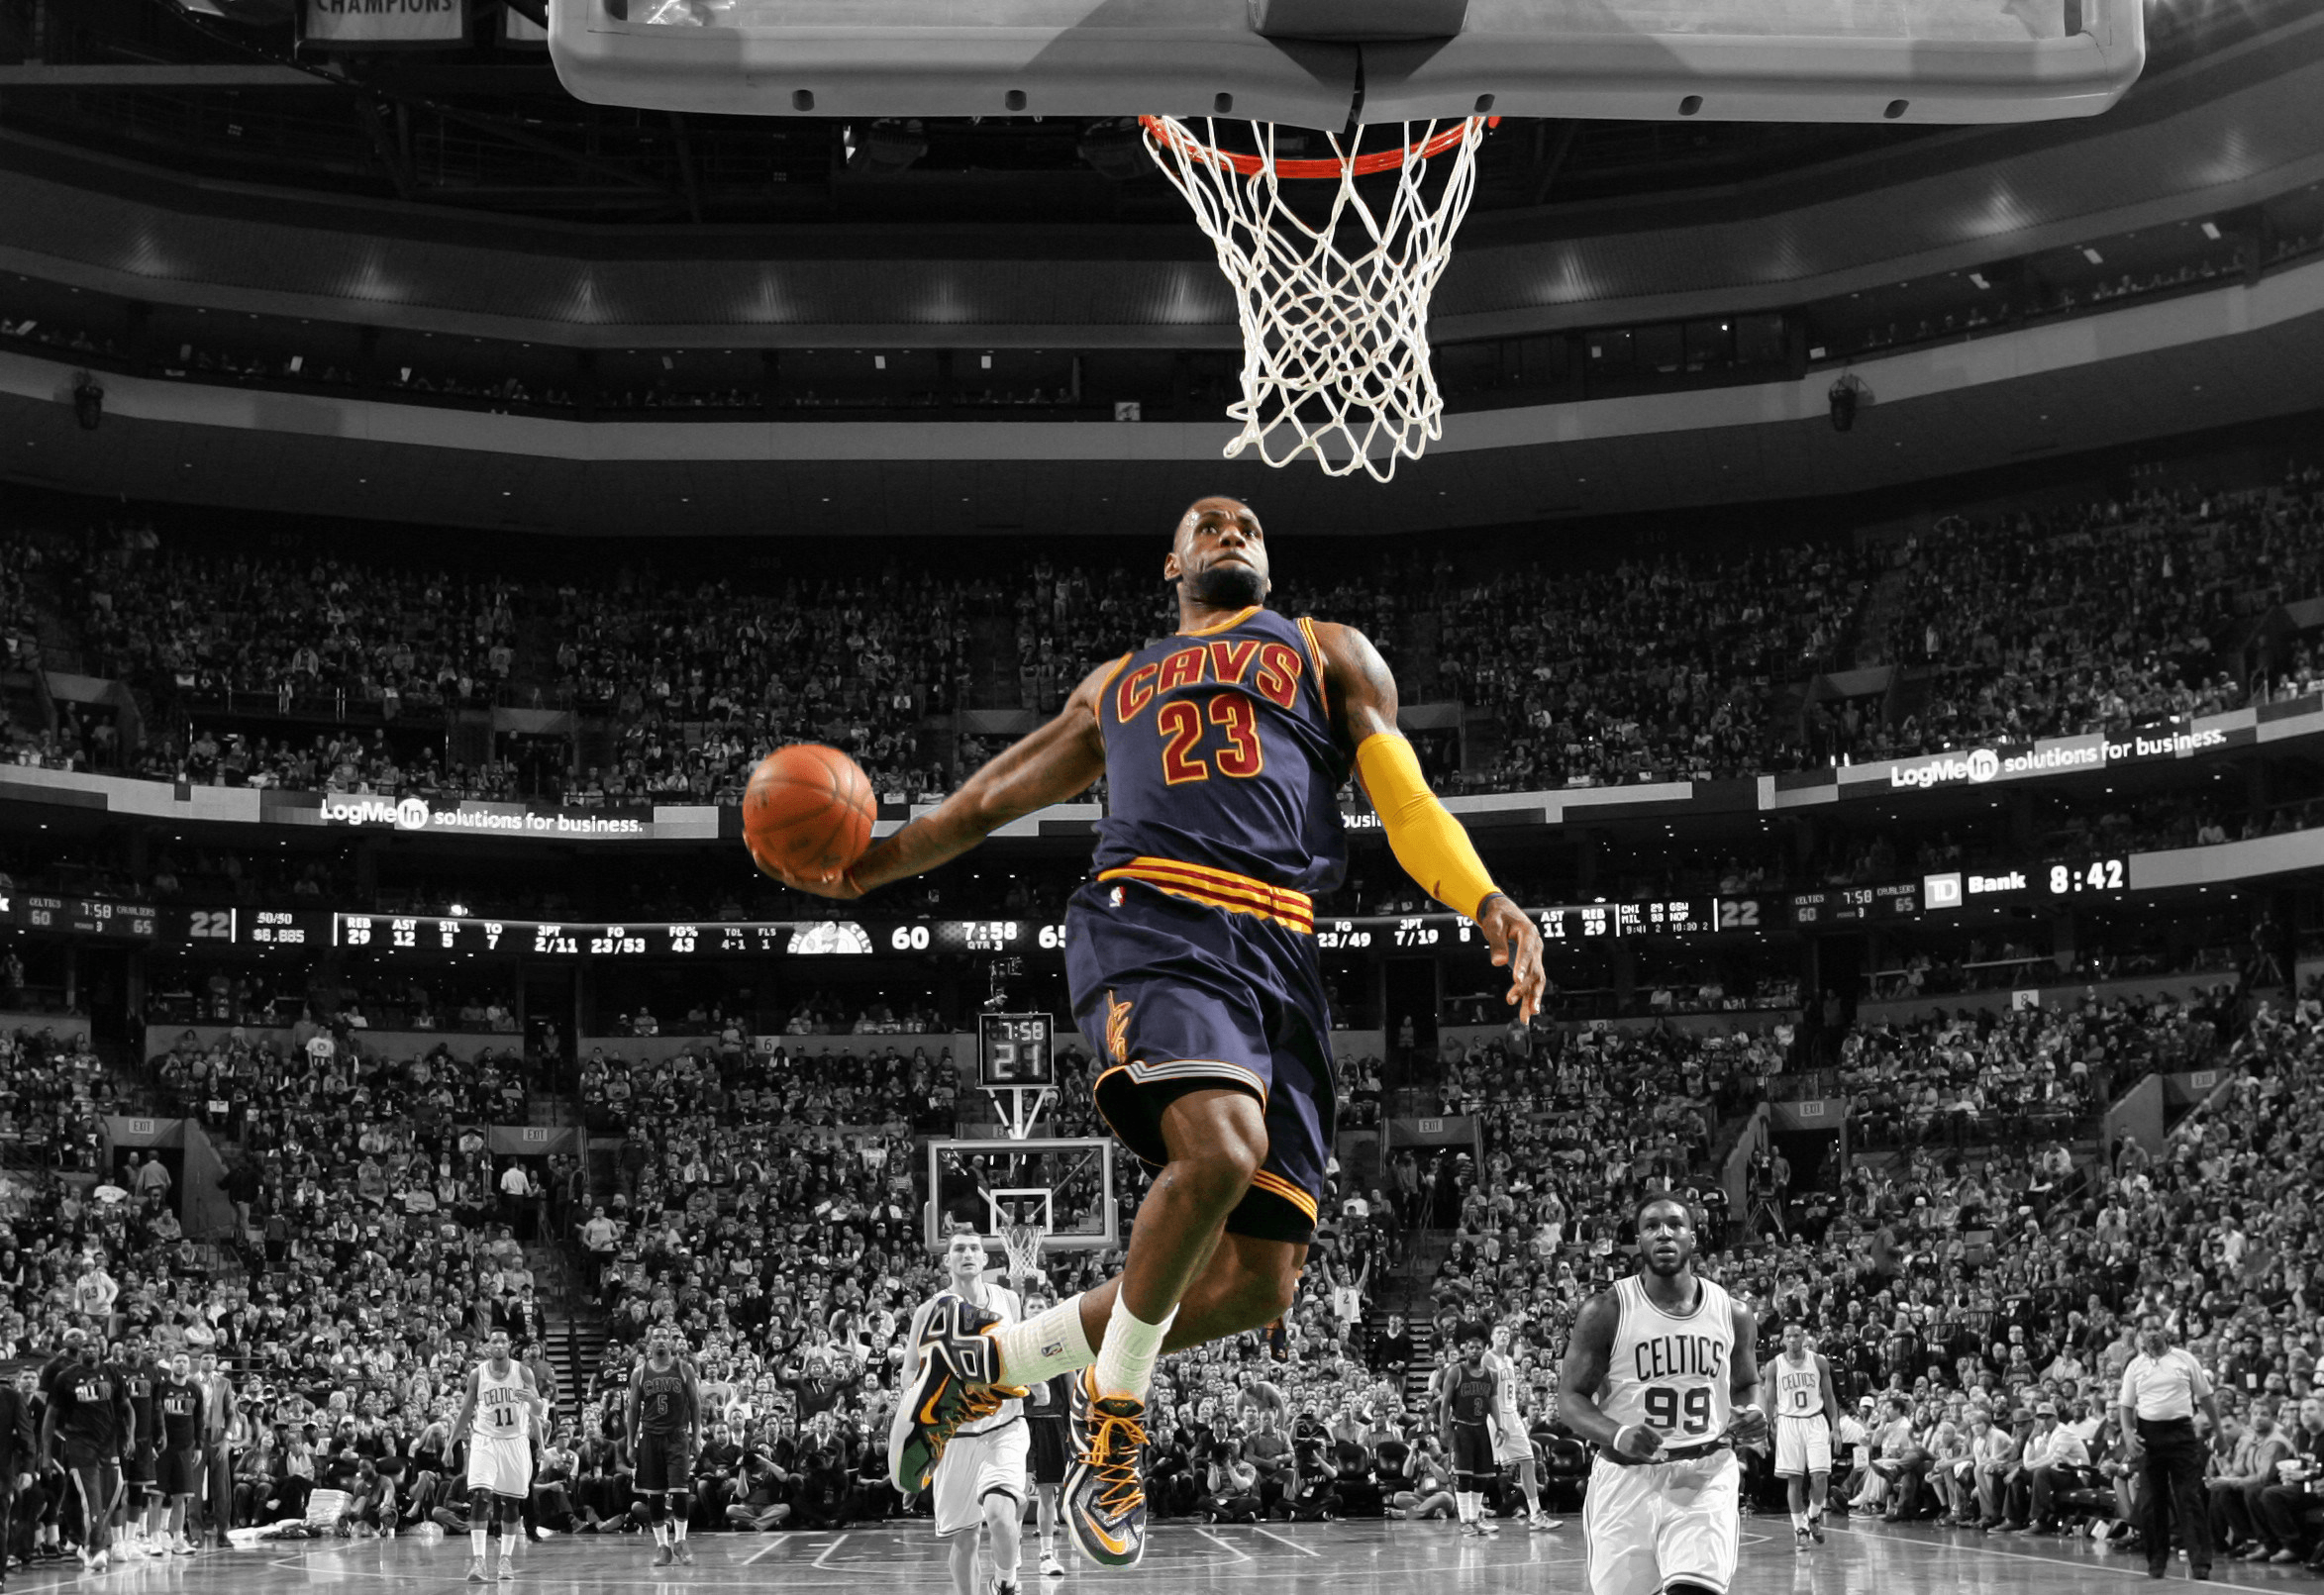 Sports LeBron James Basketball Player wallpaper Desktop, Phone